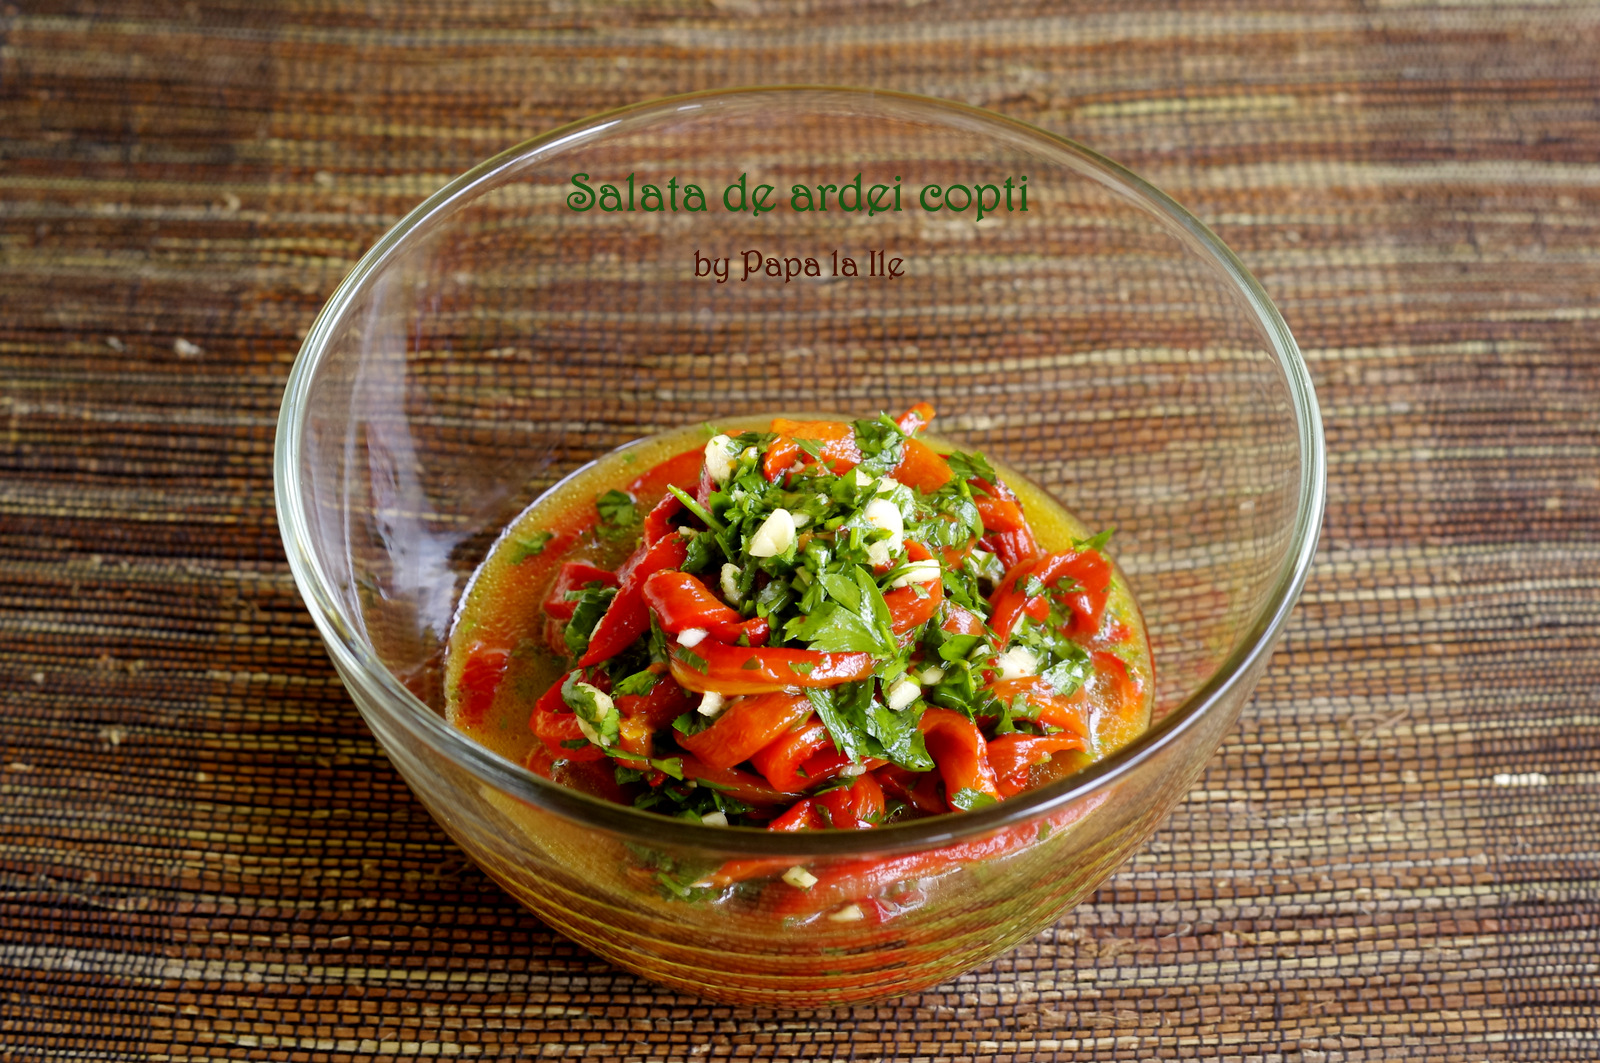 Salata de vinete, salata de ardei copti (4)